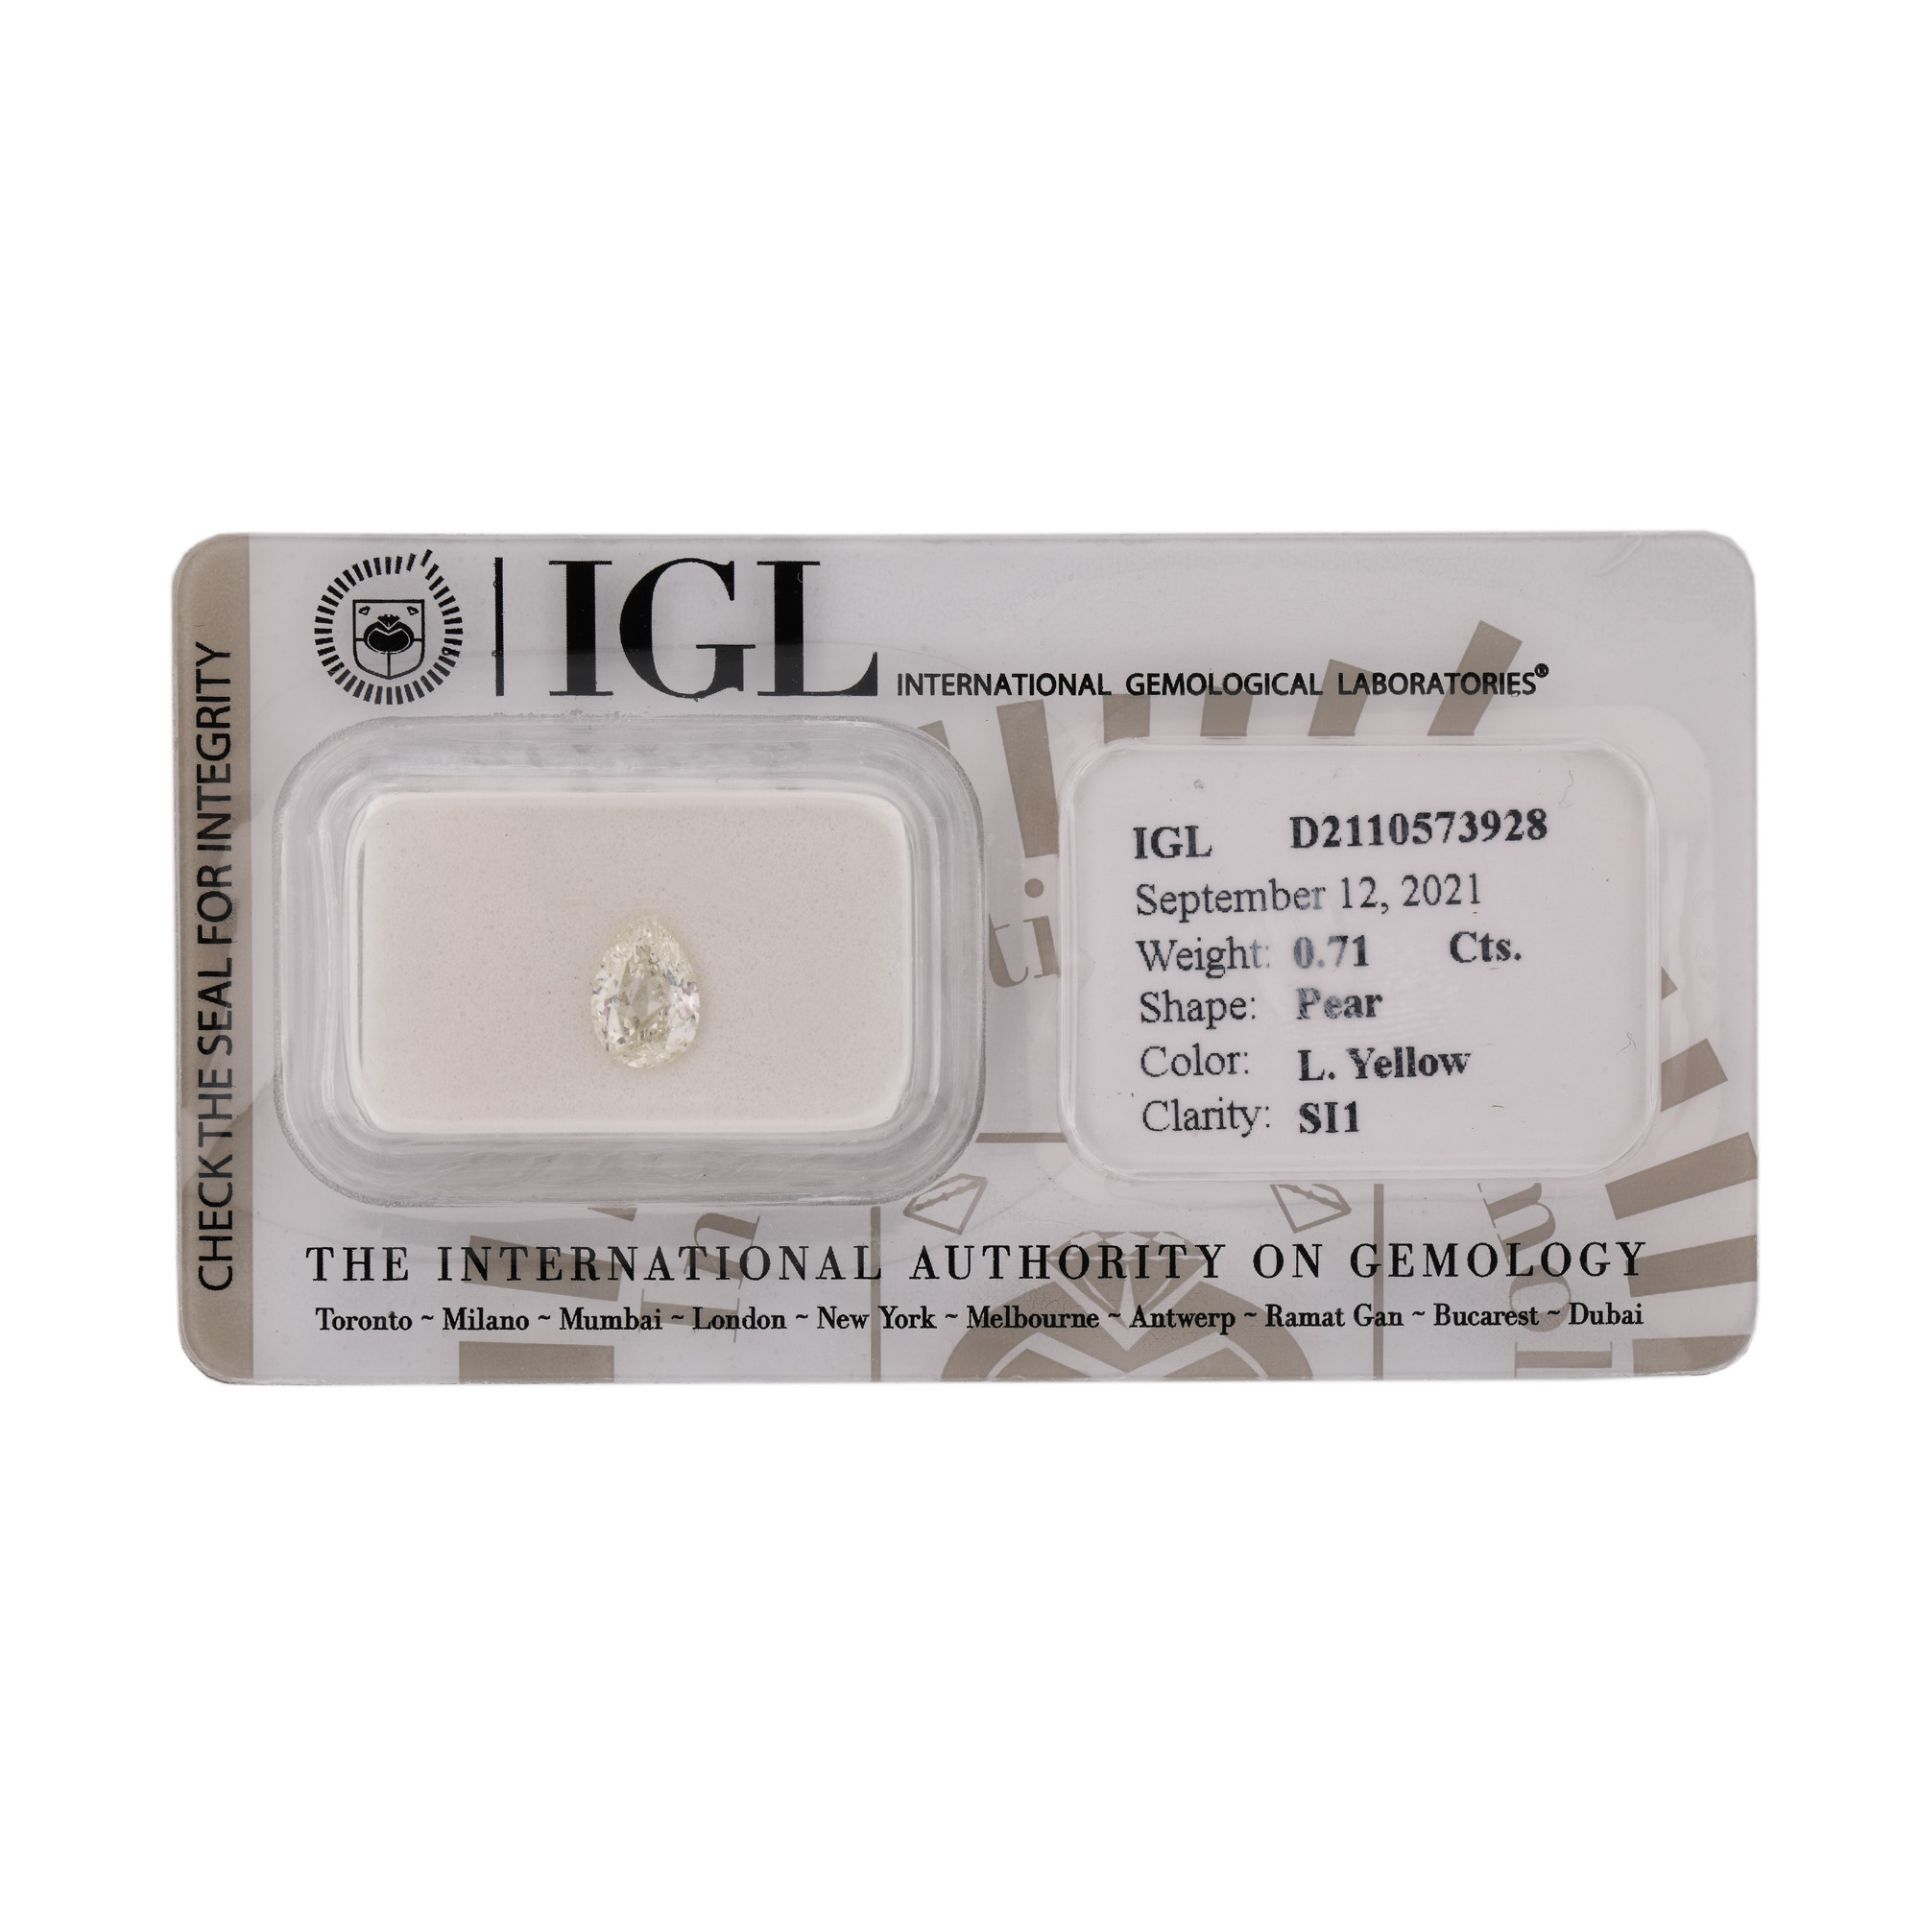 Pear faceted diamond, 0.71 ct., IGL gemmological certificate